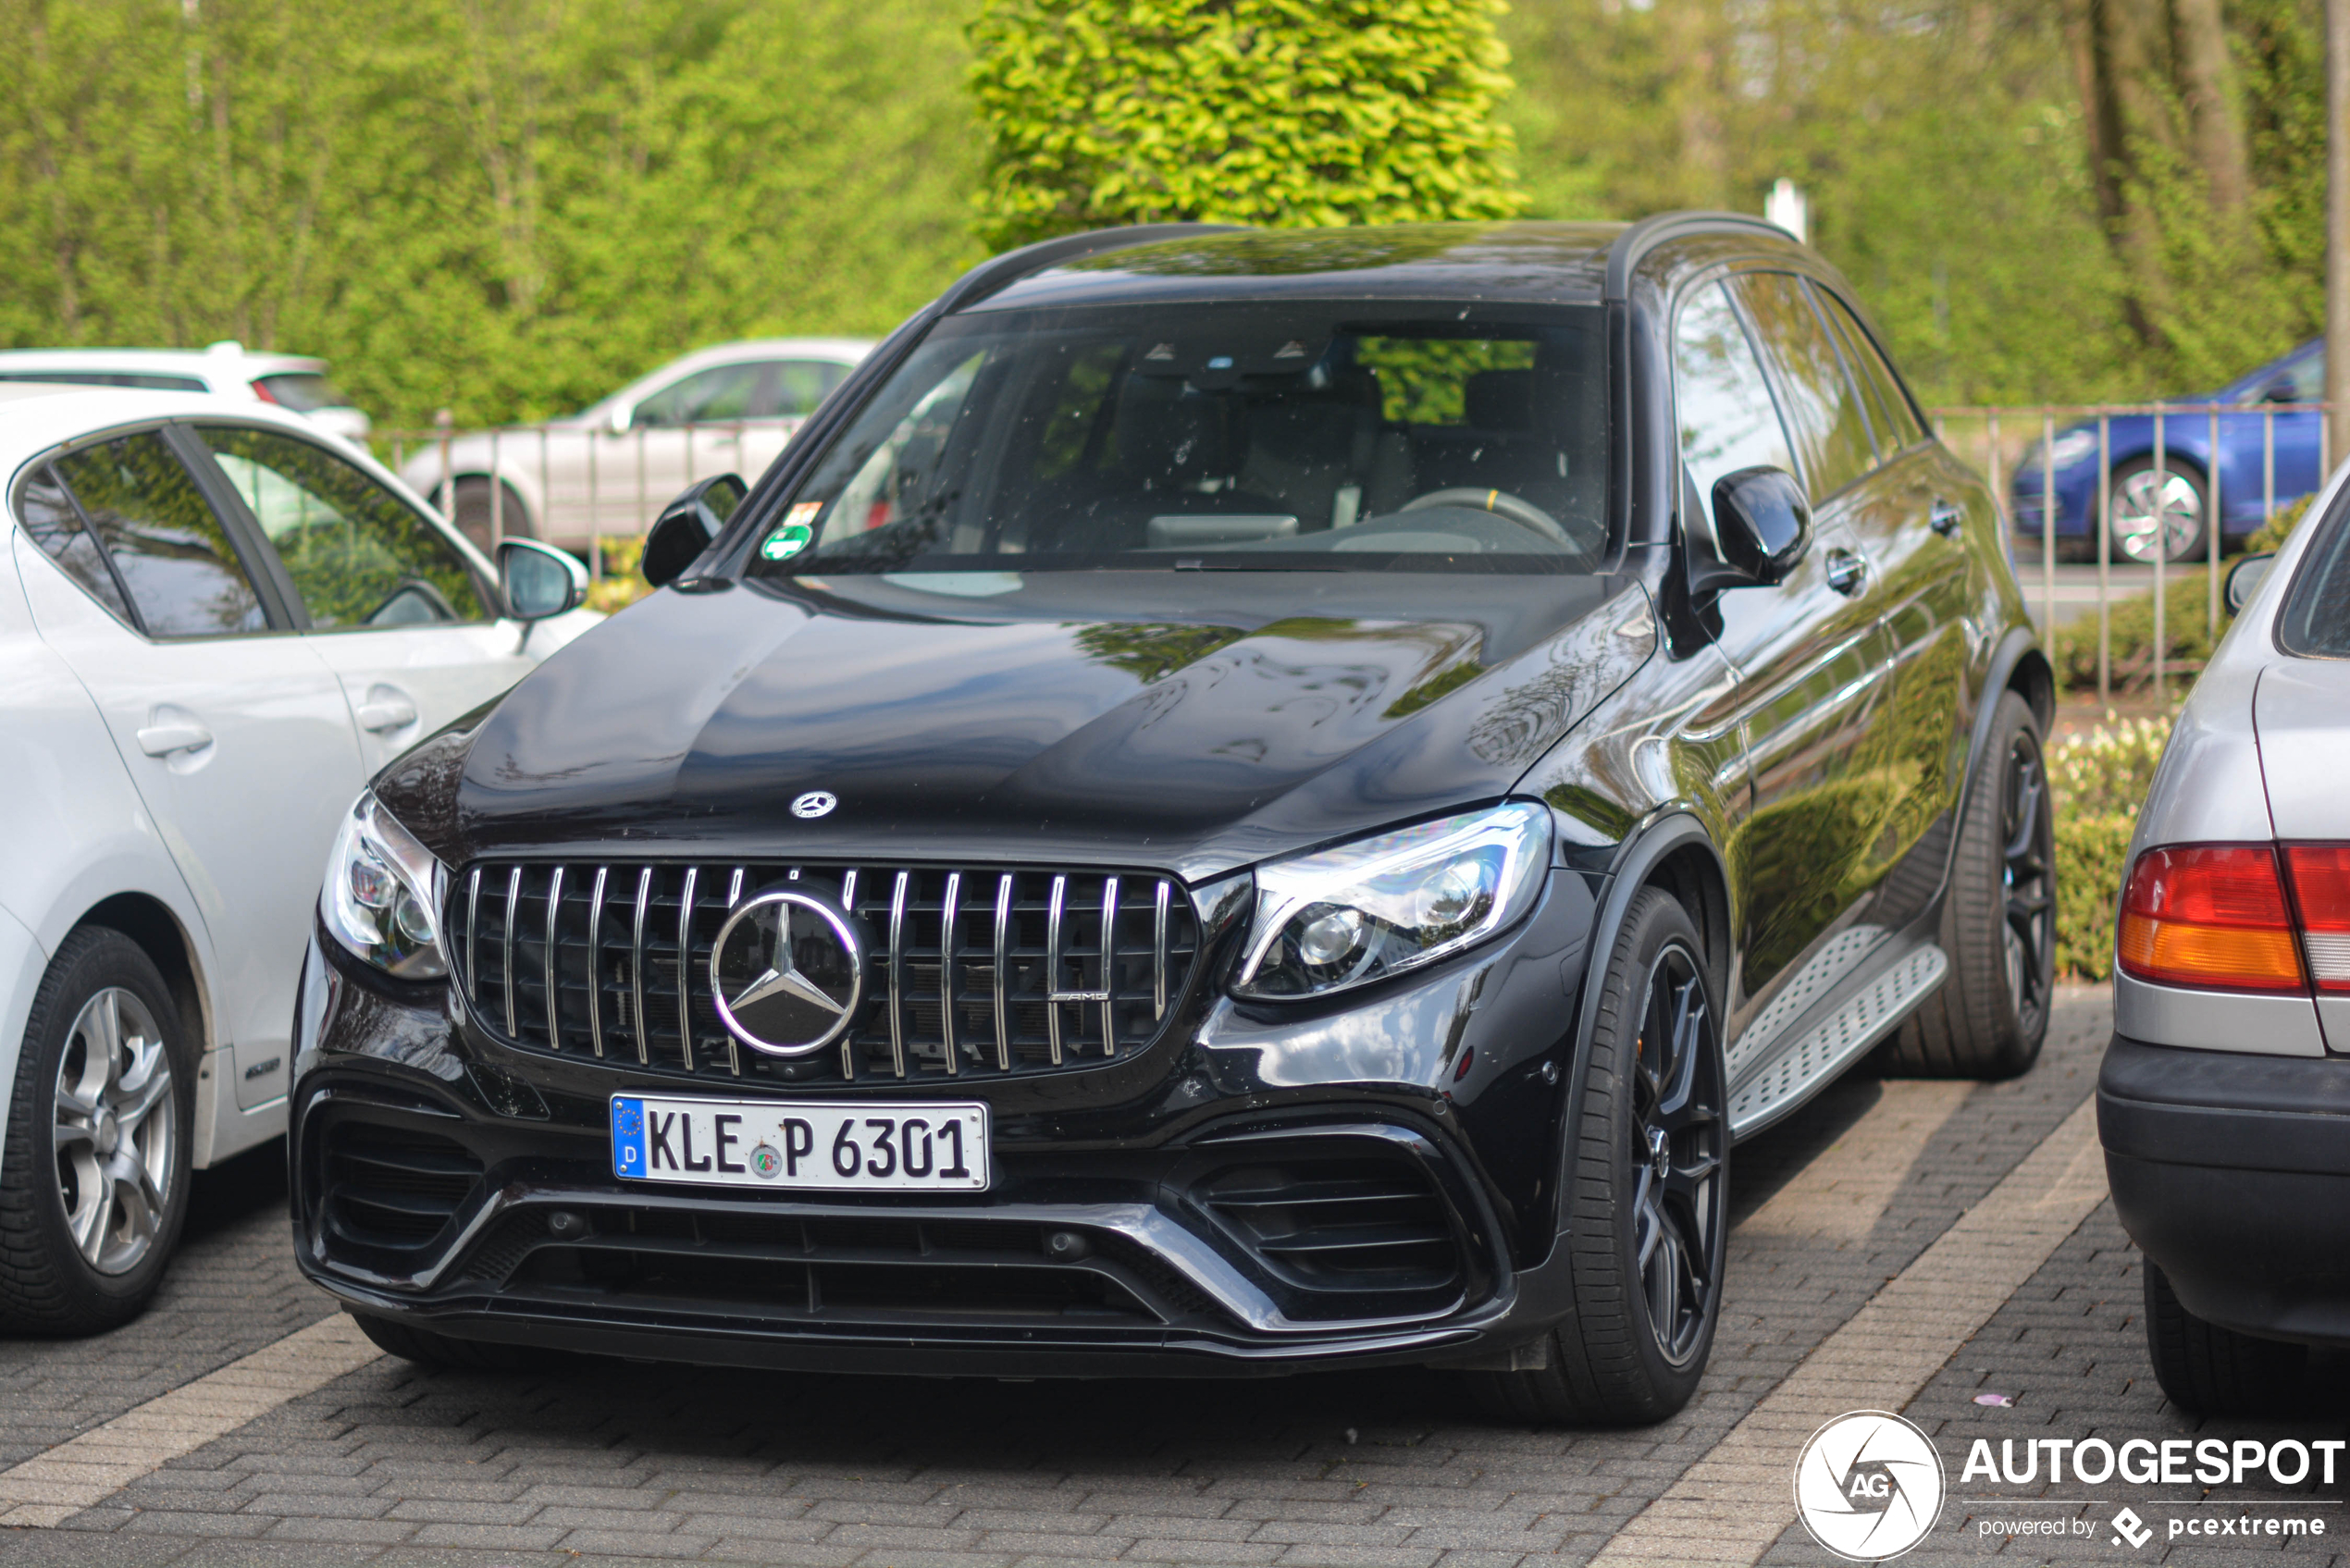 Mercedes-AMG GLC 63 S X253 2018 - 17 May 2022 - Autogespot